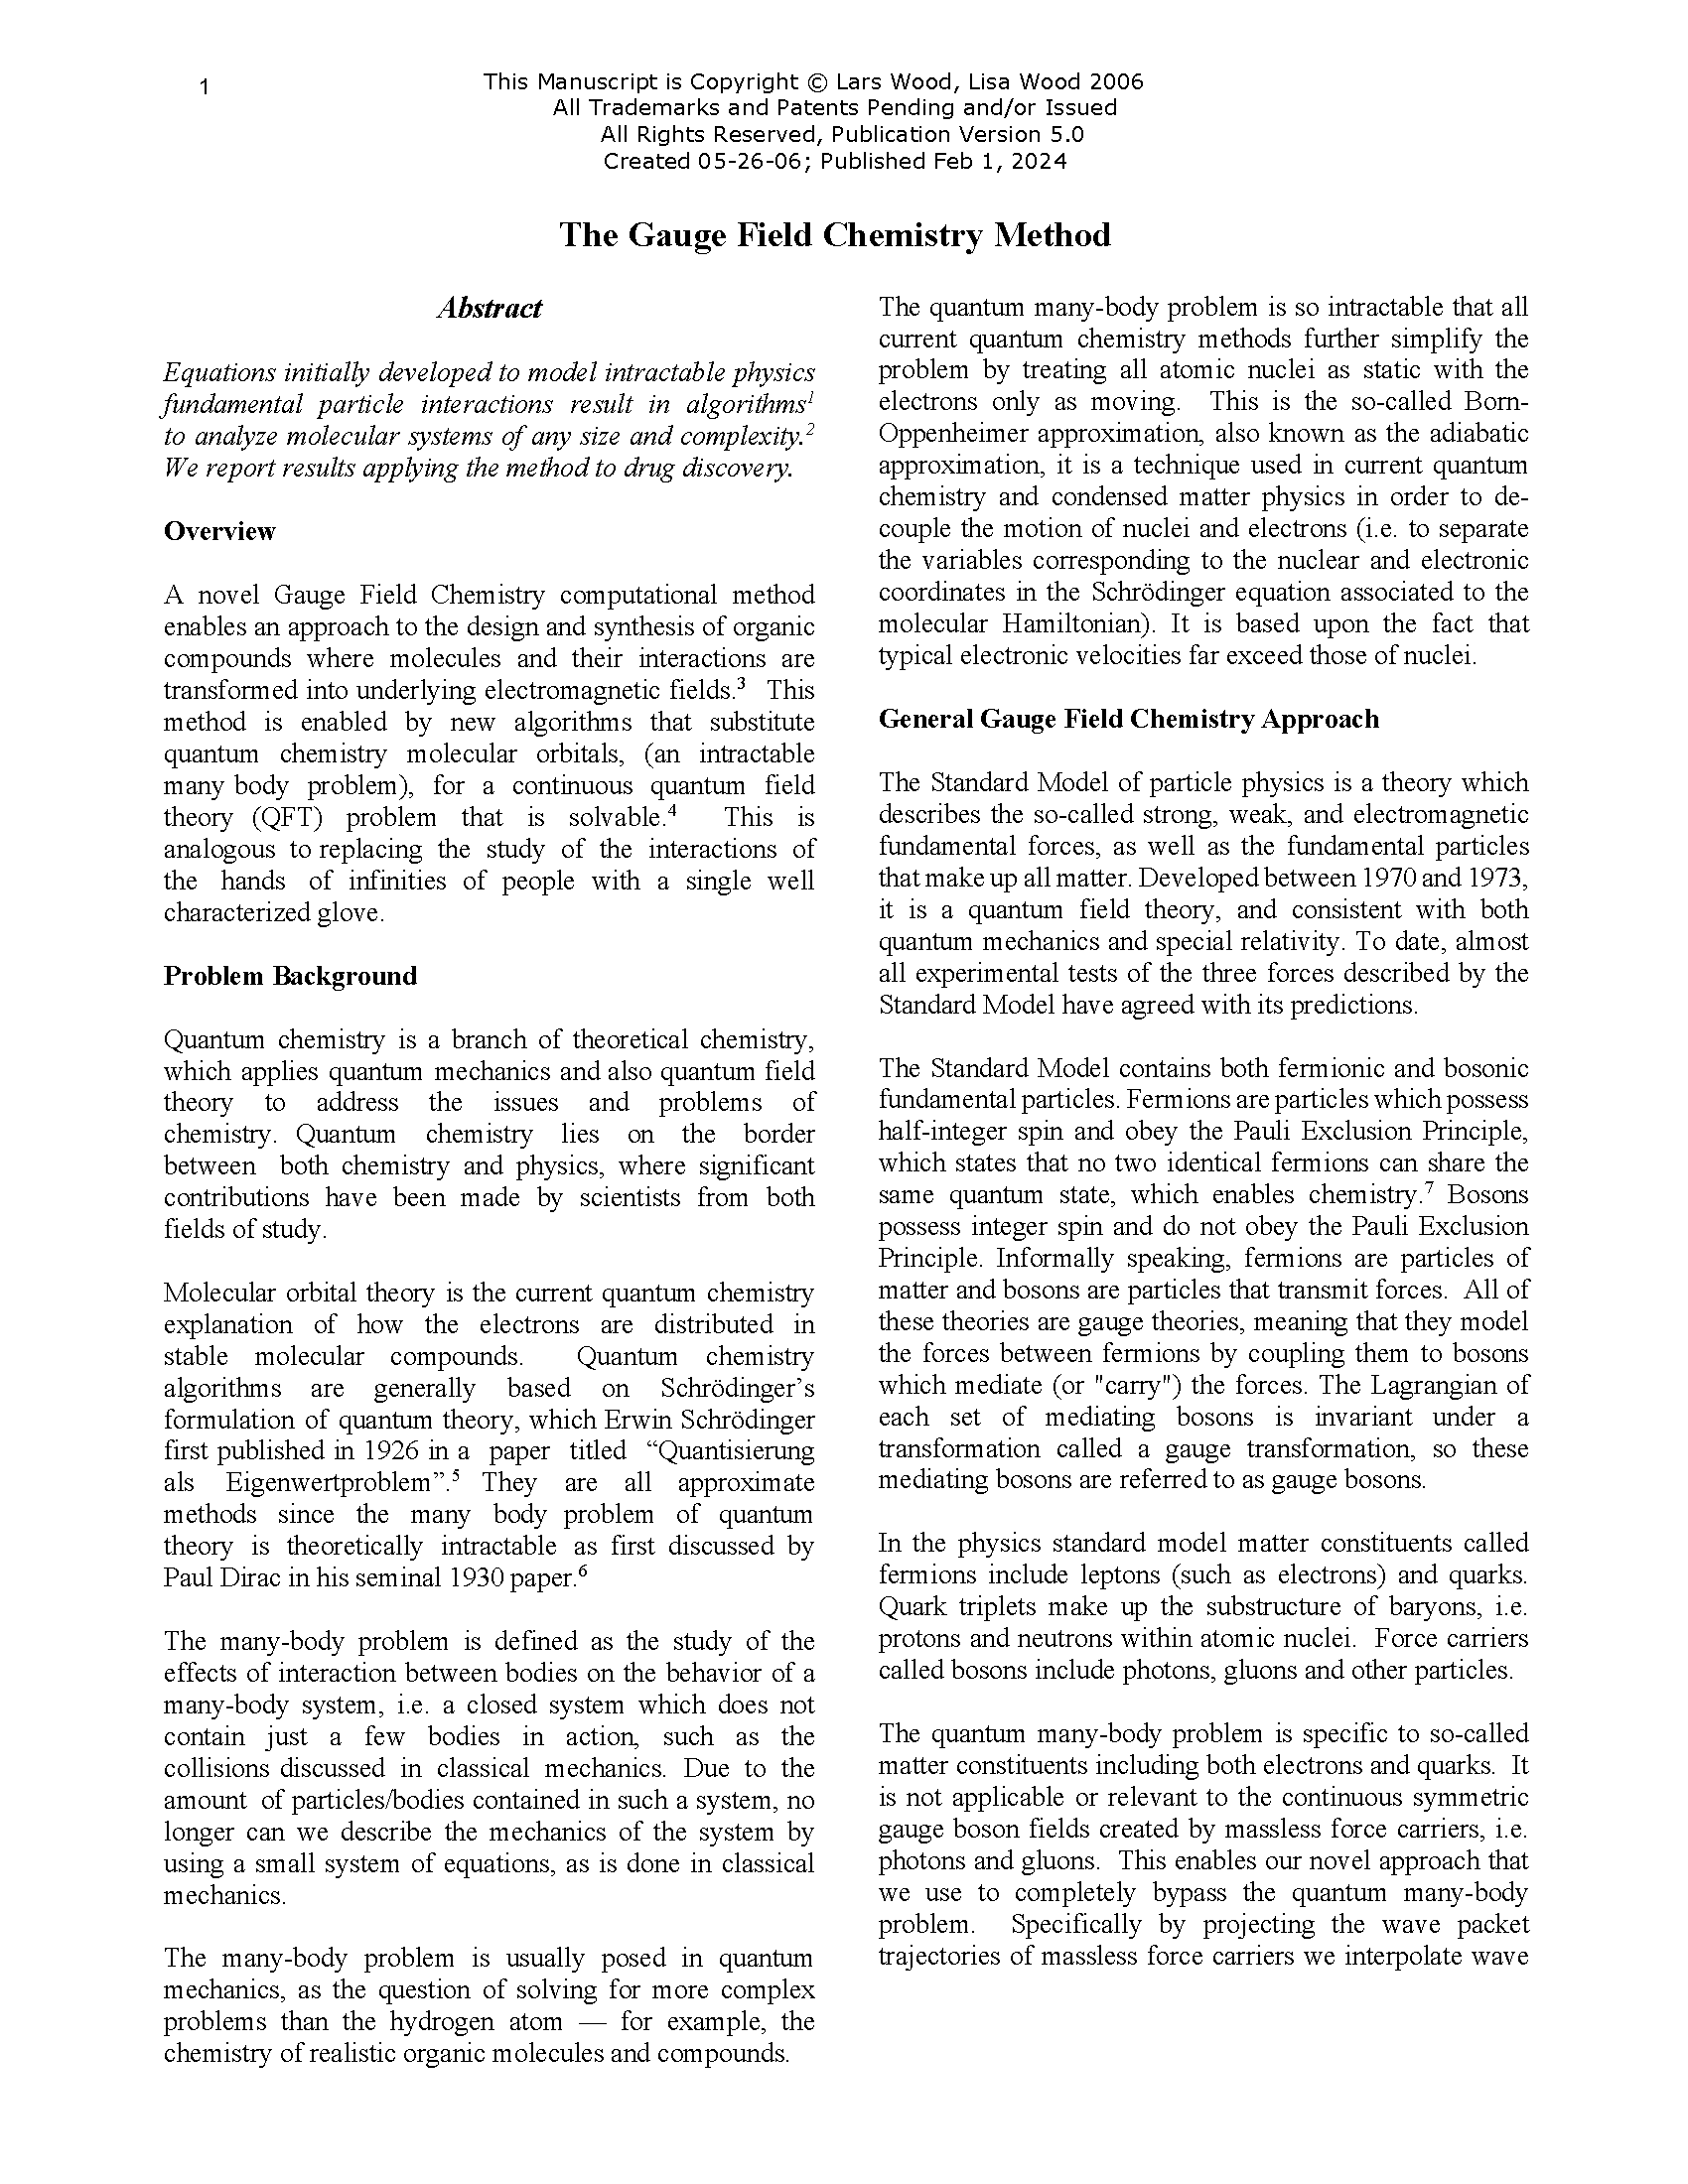 The Gauge Field Chemistry Method V5 Published_Page_01.png